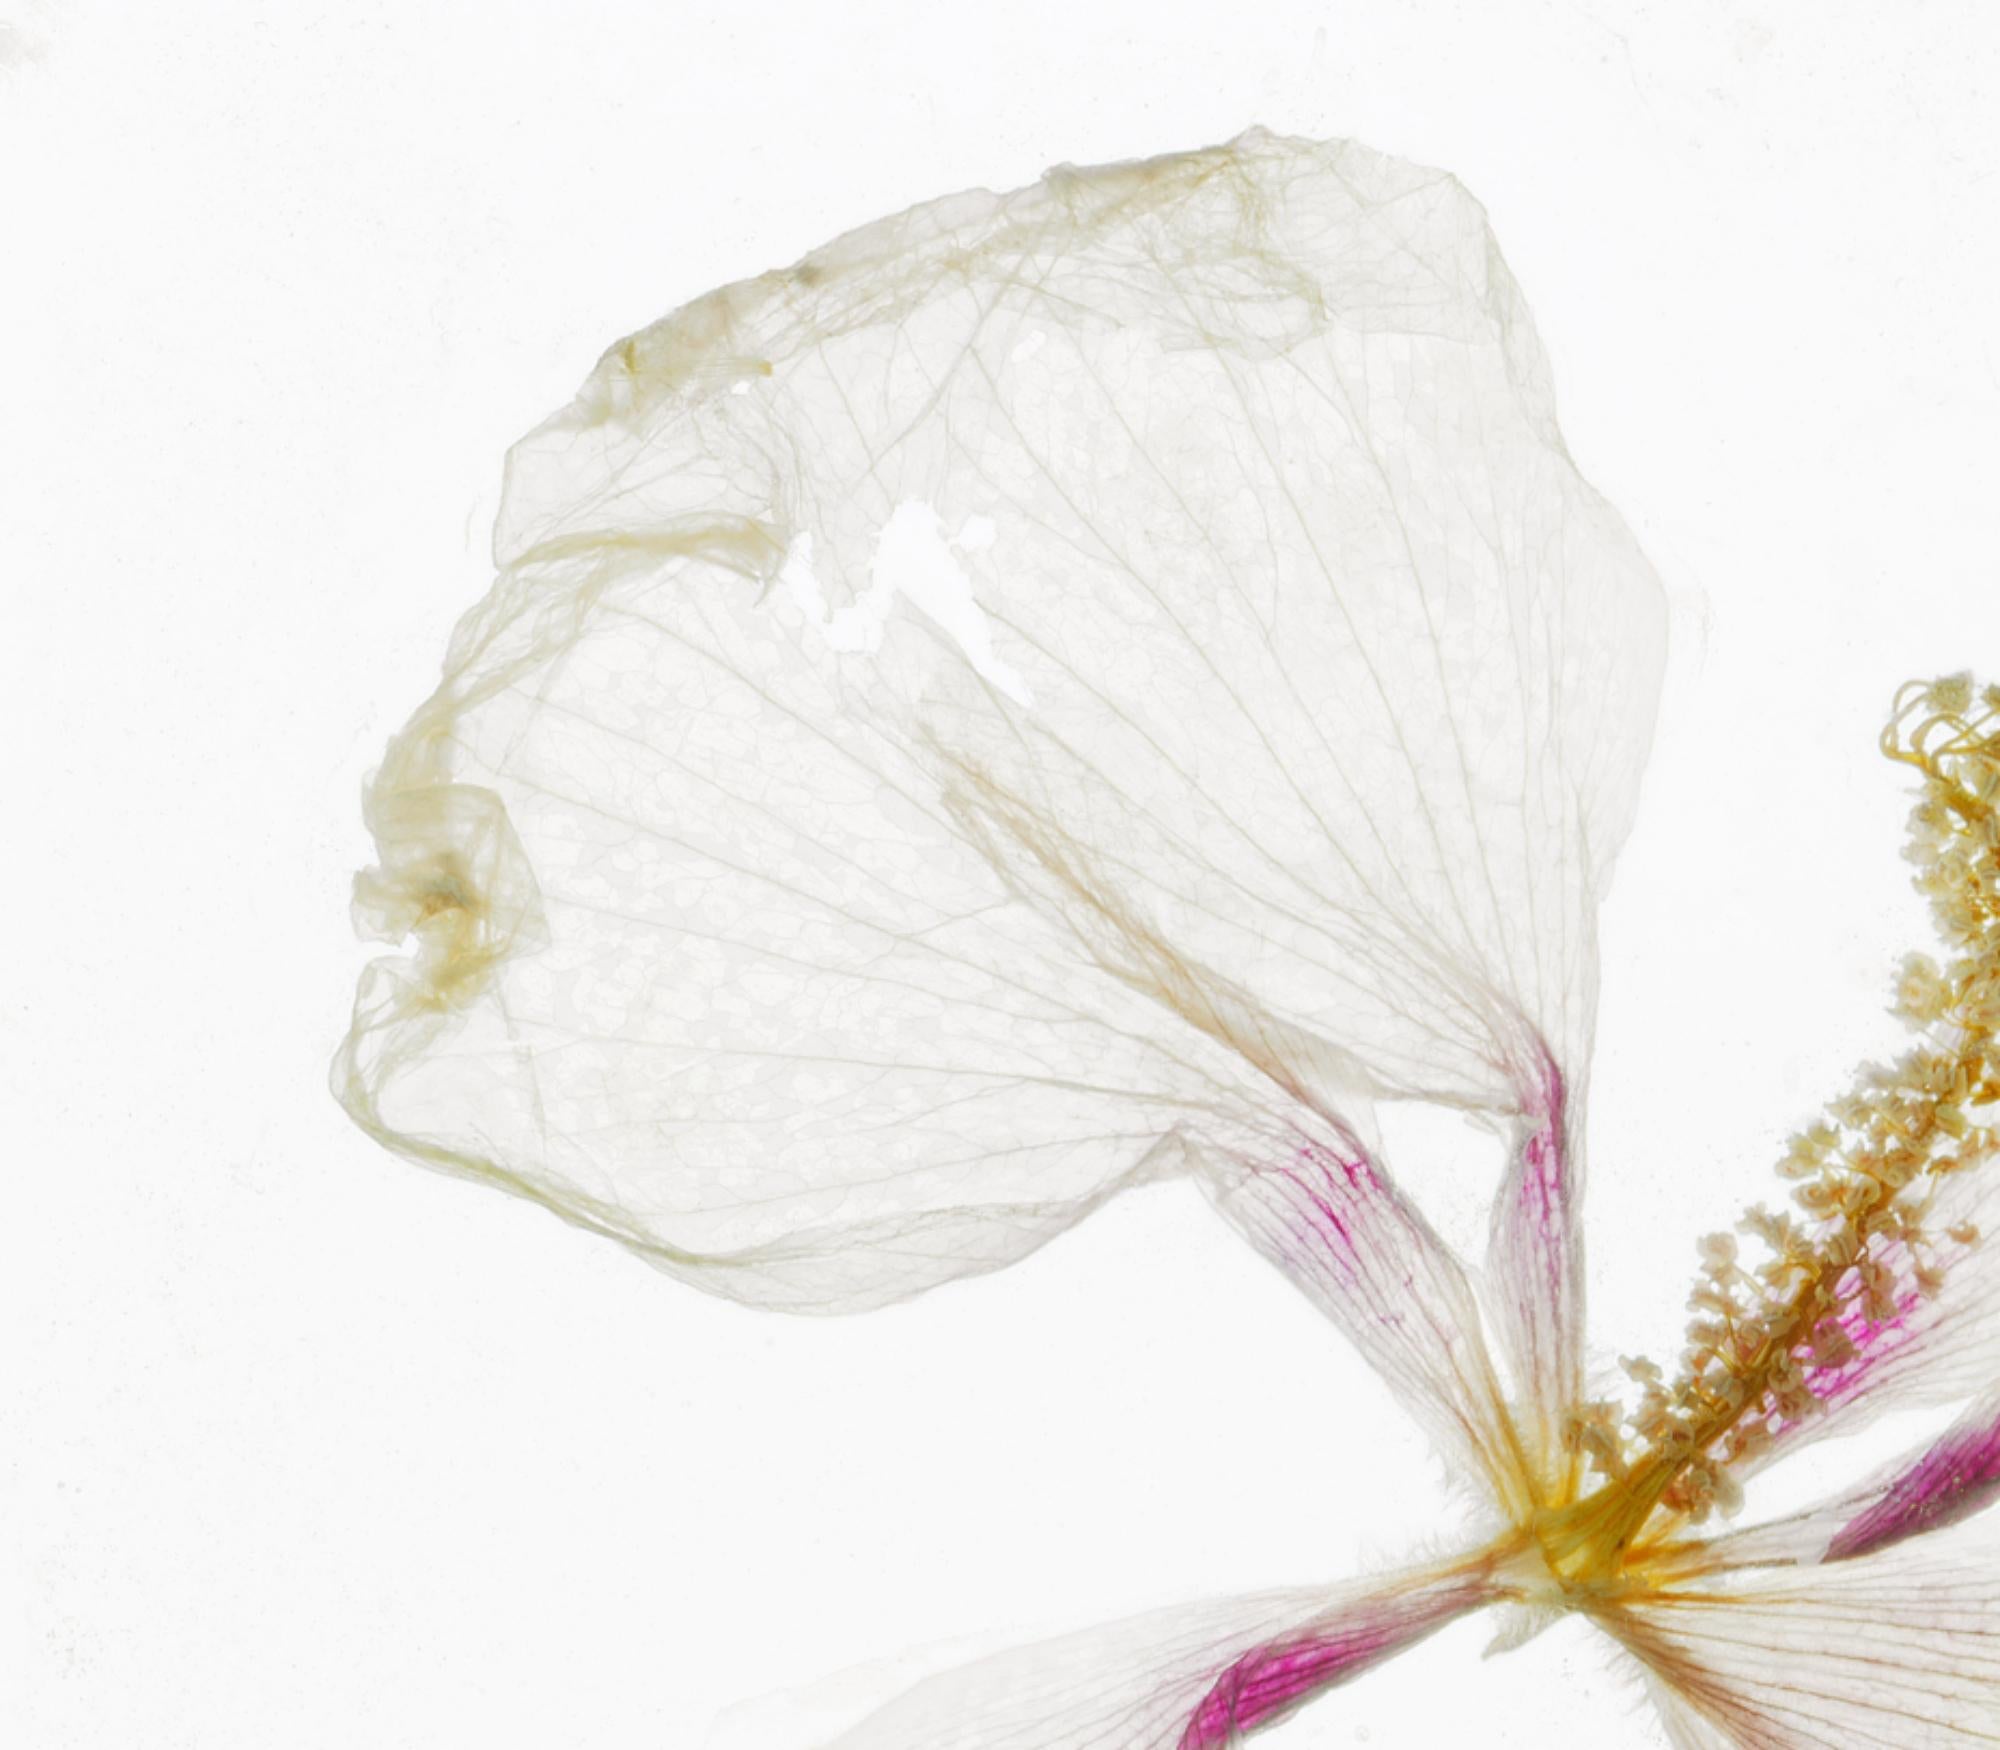 The scent of her lingers – Brigitte Lustenberger, Flower For Sale 4